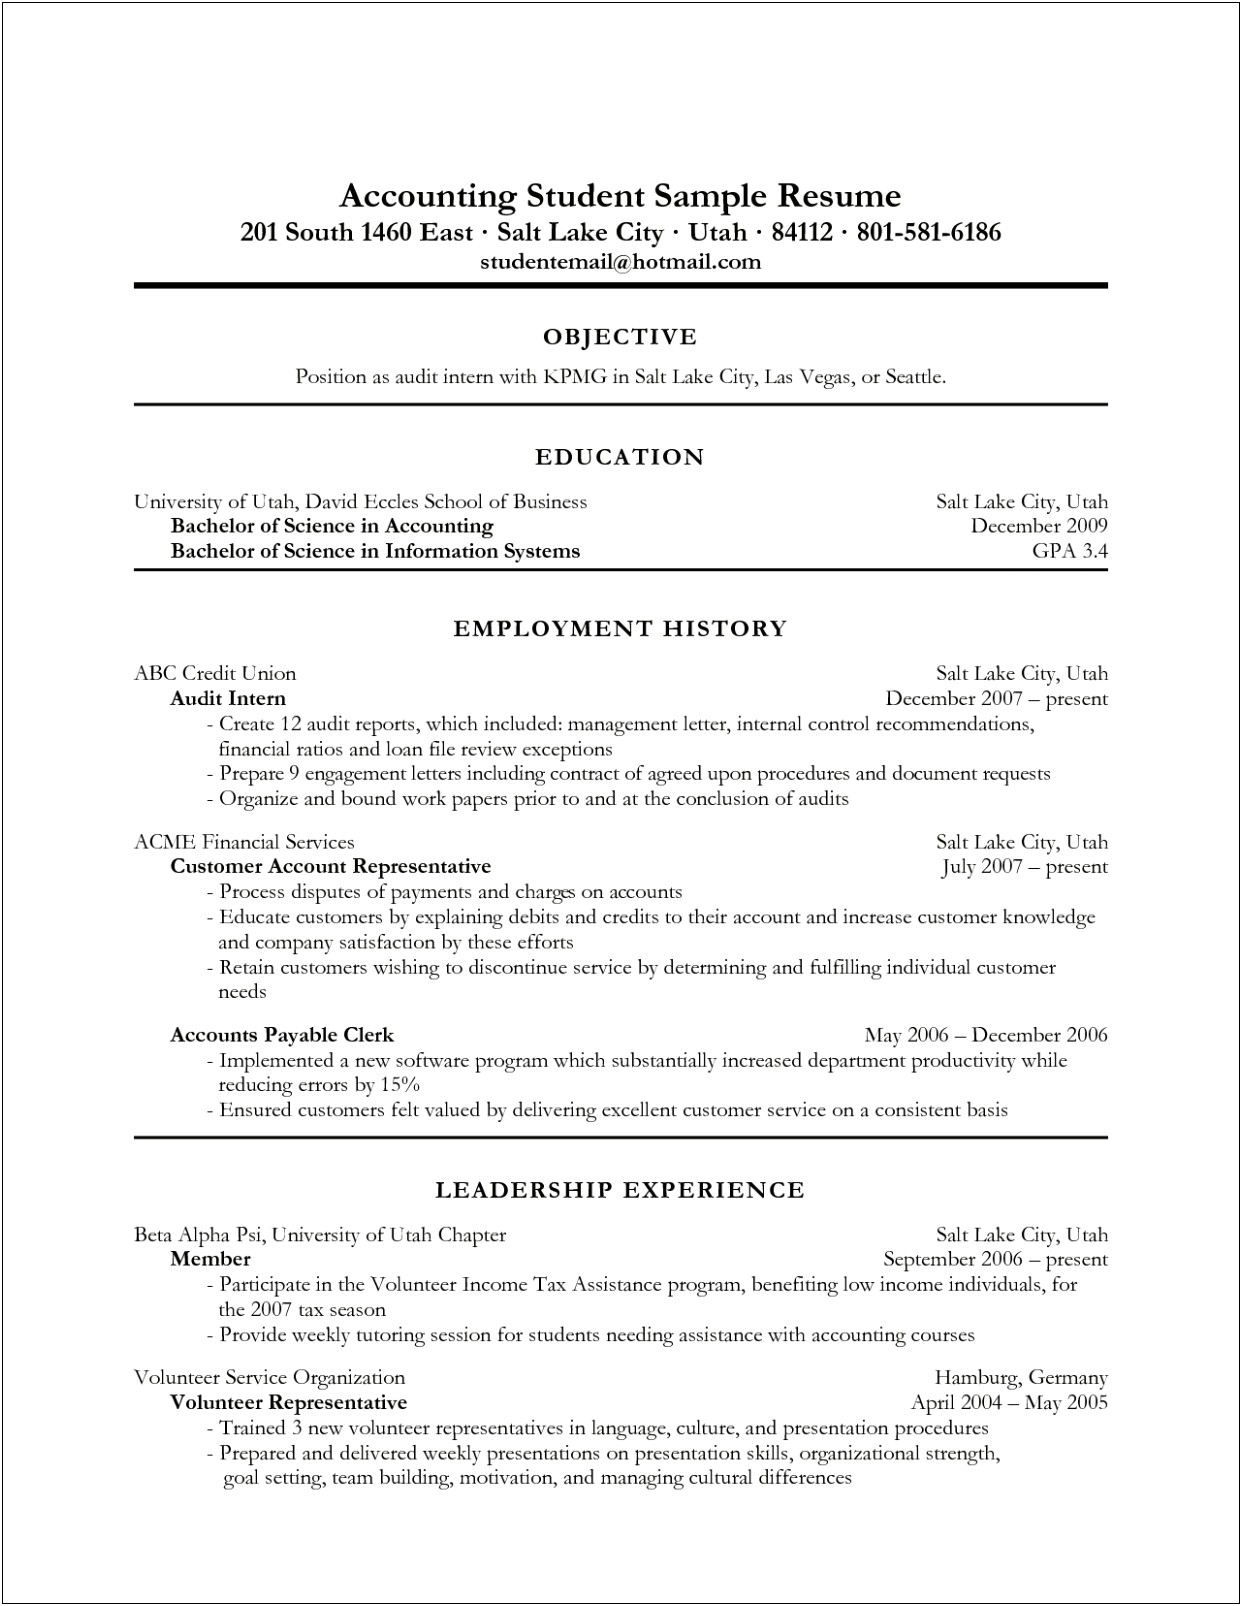 Nursing Resume Objective Examples Monster.commonster.com